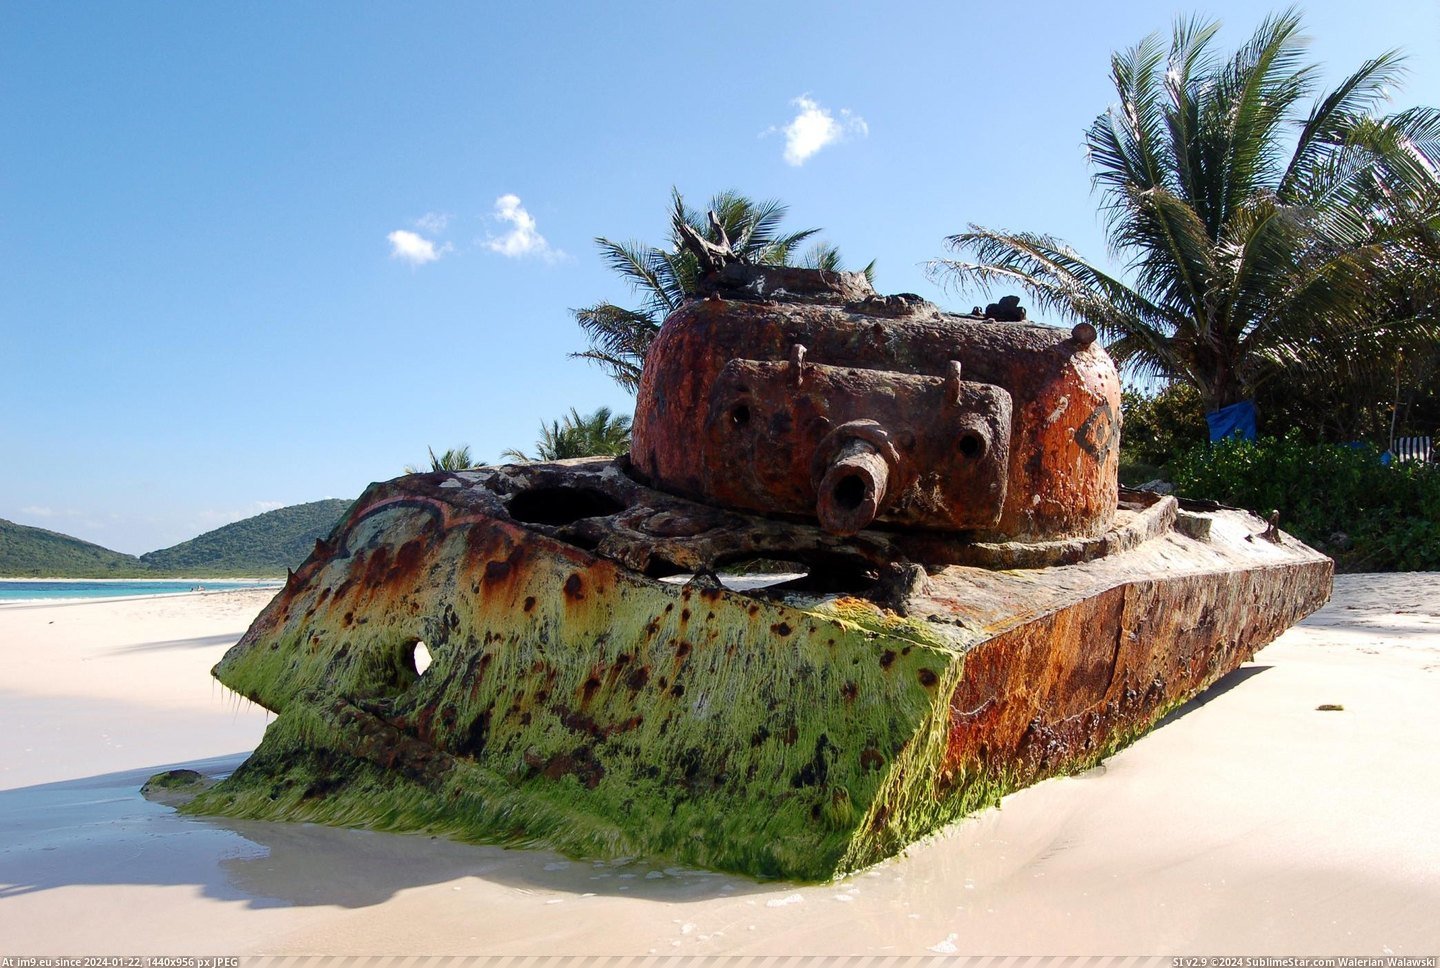 #Beach #Abandoned #Rico #Tank #Puerto [Pics] This abandoned tank on a beach in Puerto Rico Pic. (Изображение из альбом My r/PICS favs))